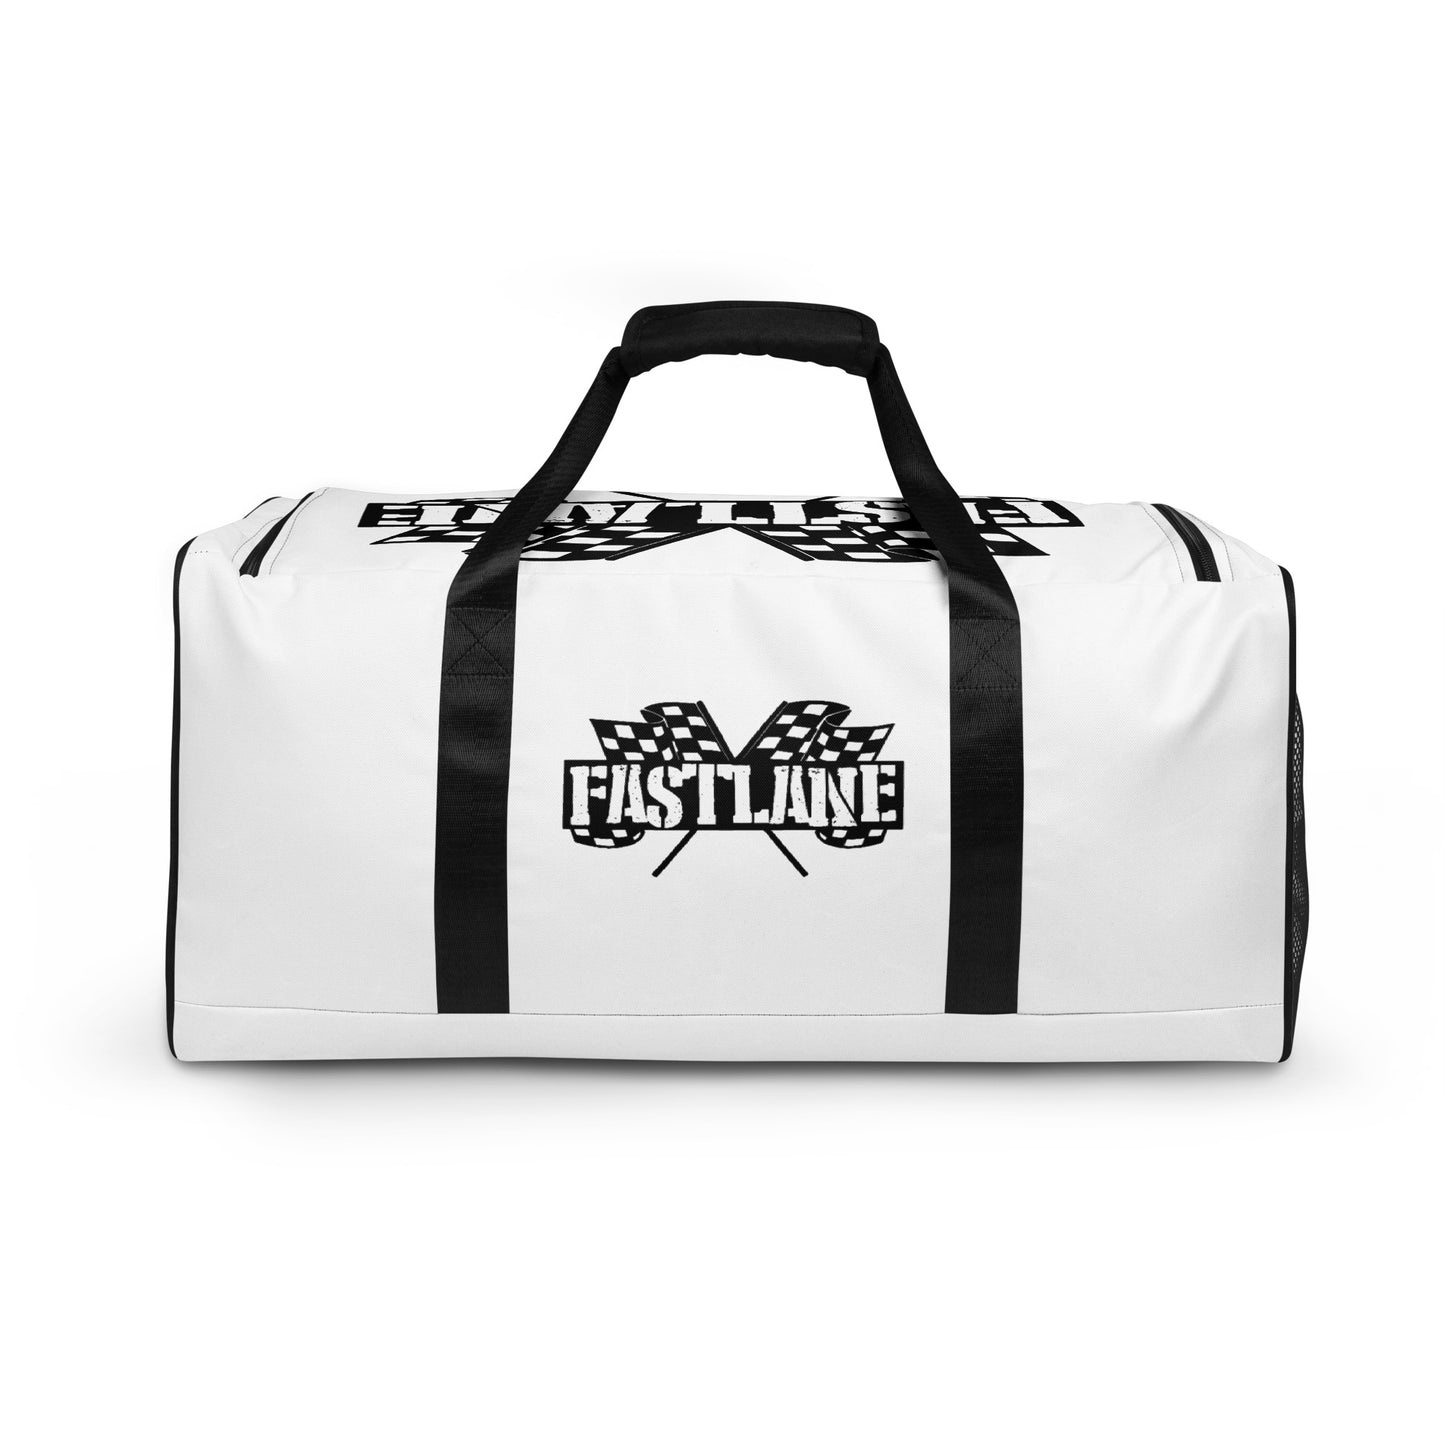 Fastlane Duffle bag